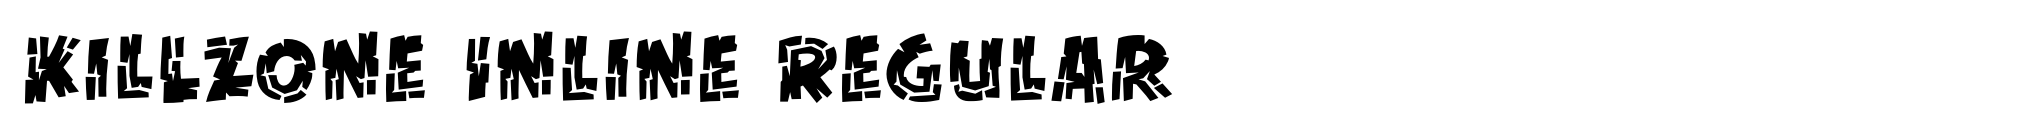 KillZone Inline Regular image